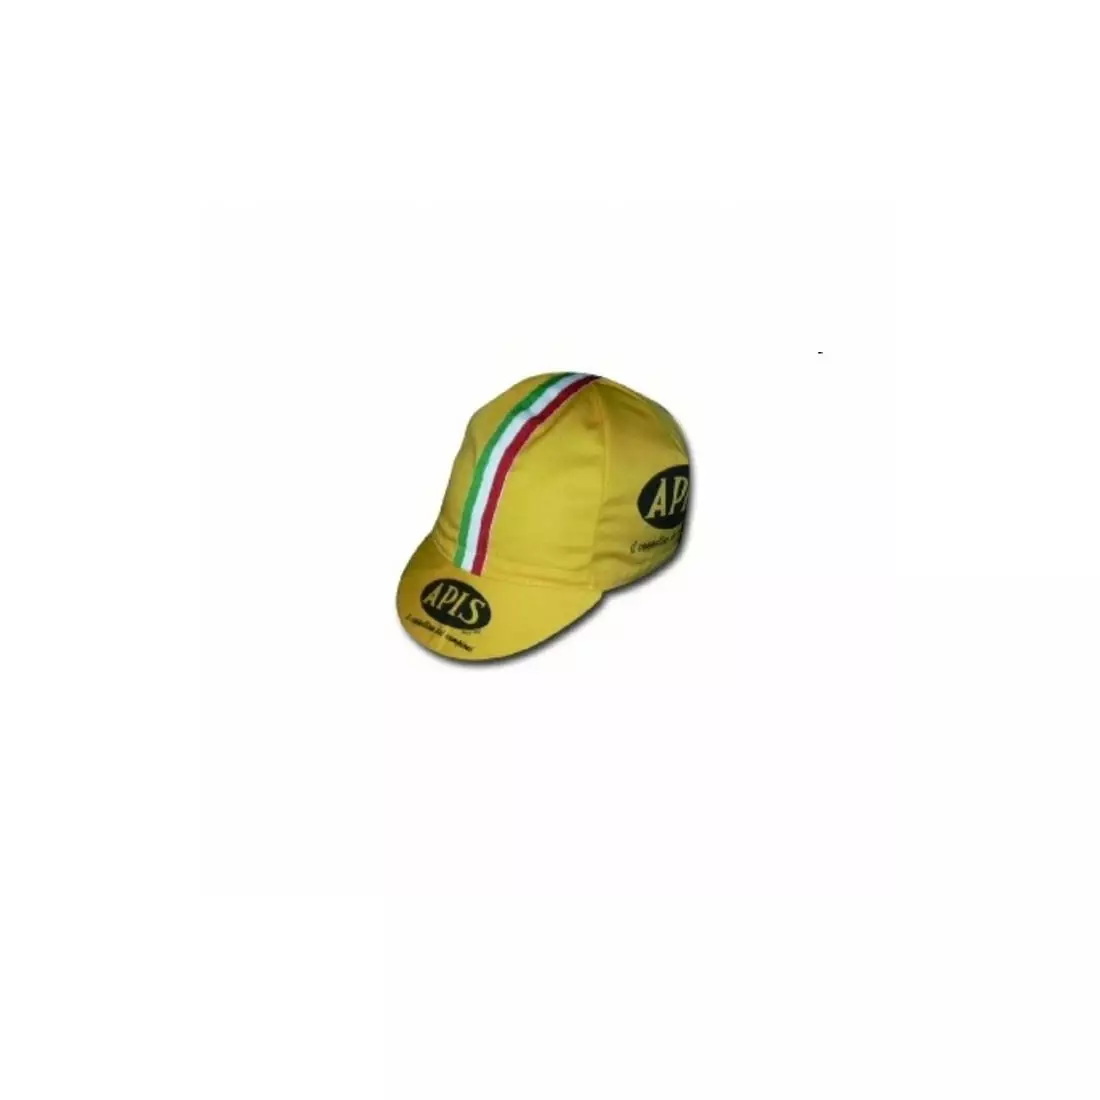 APIS PROFI VINTAGE cycling cap with visor yellow